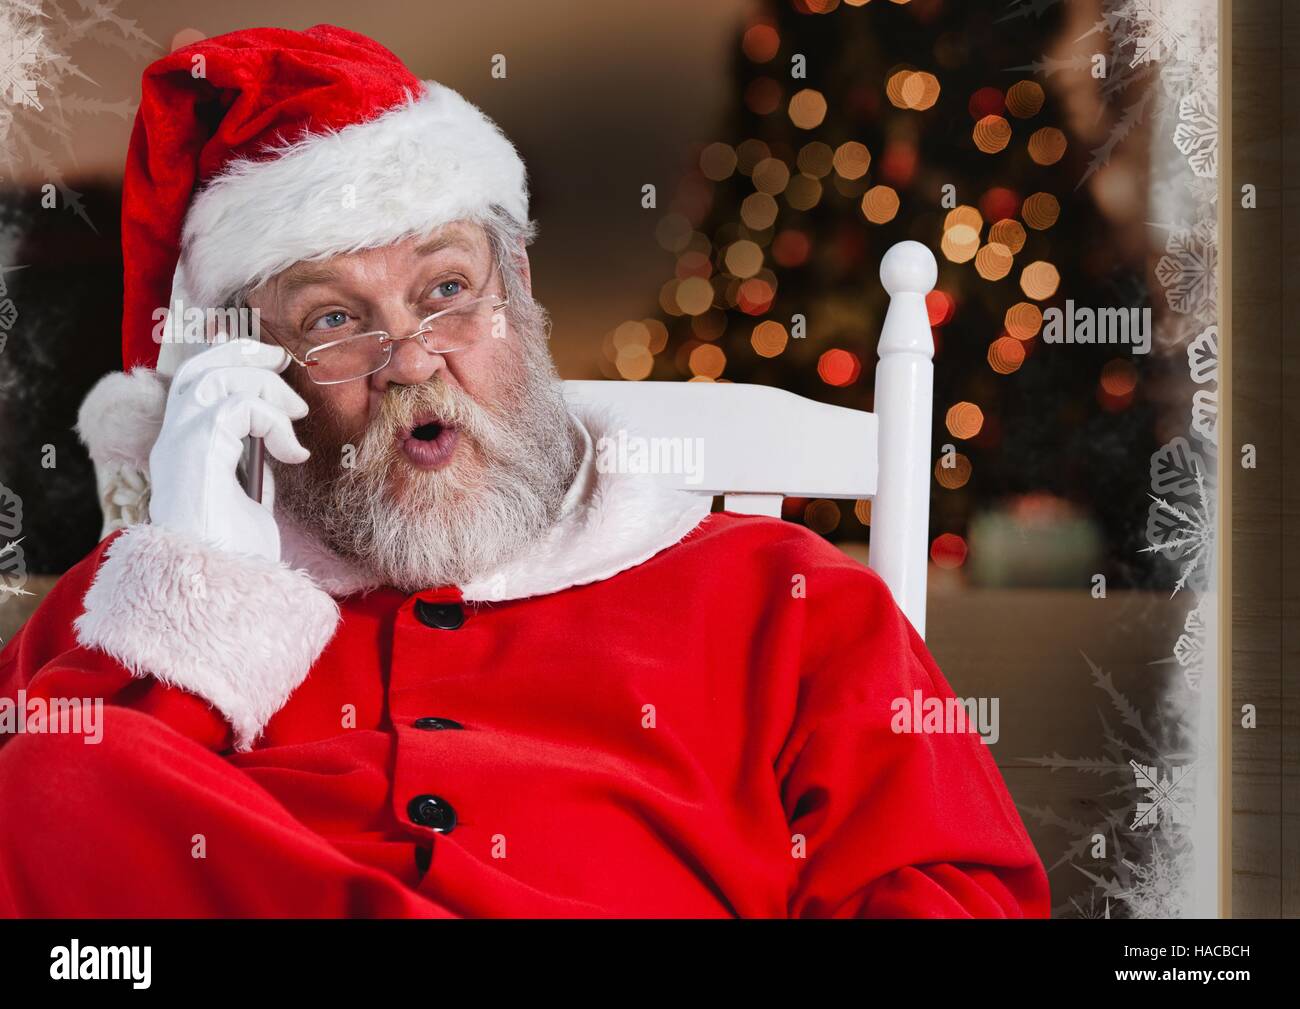 Santa claus talking on mobile phone Stock Photo - Alamy